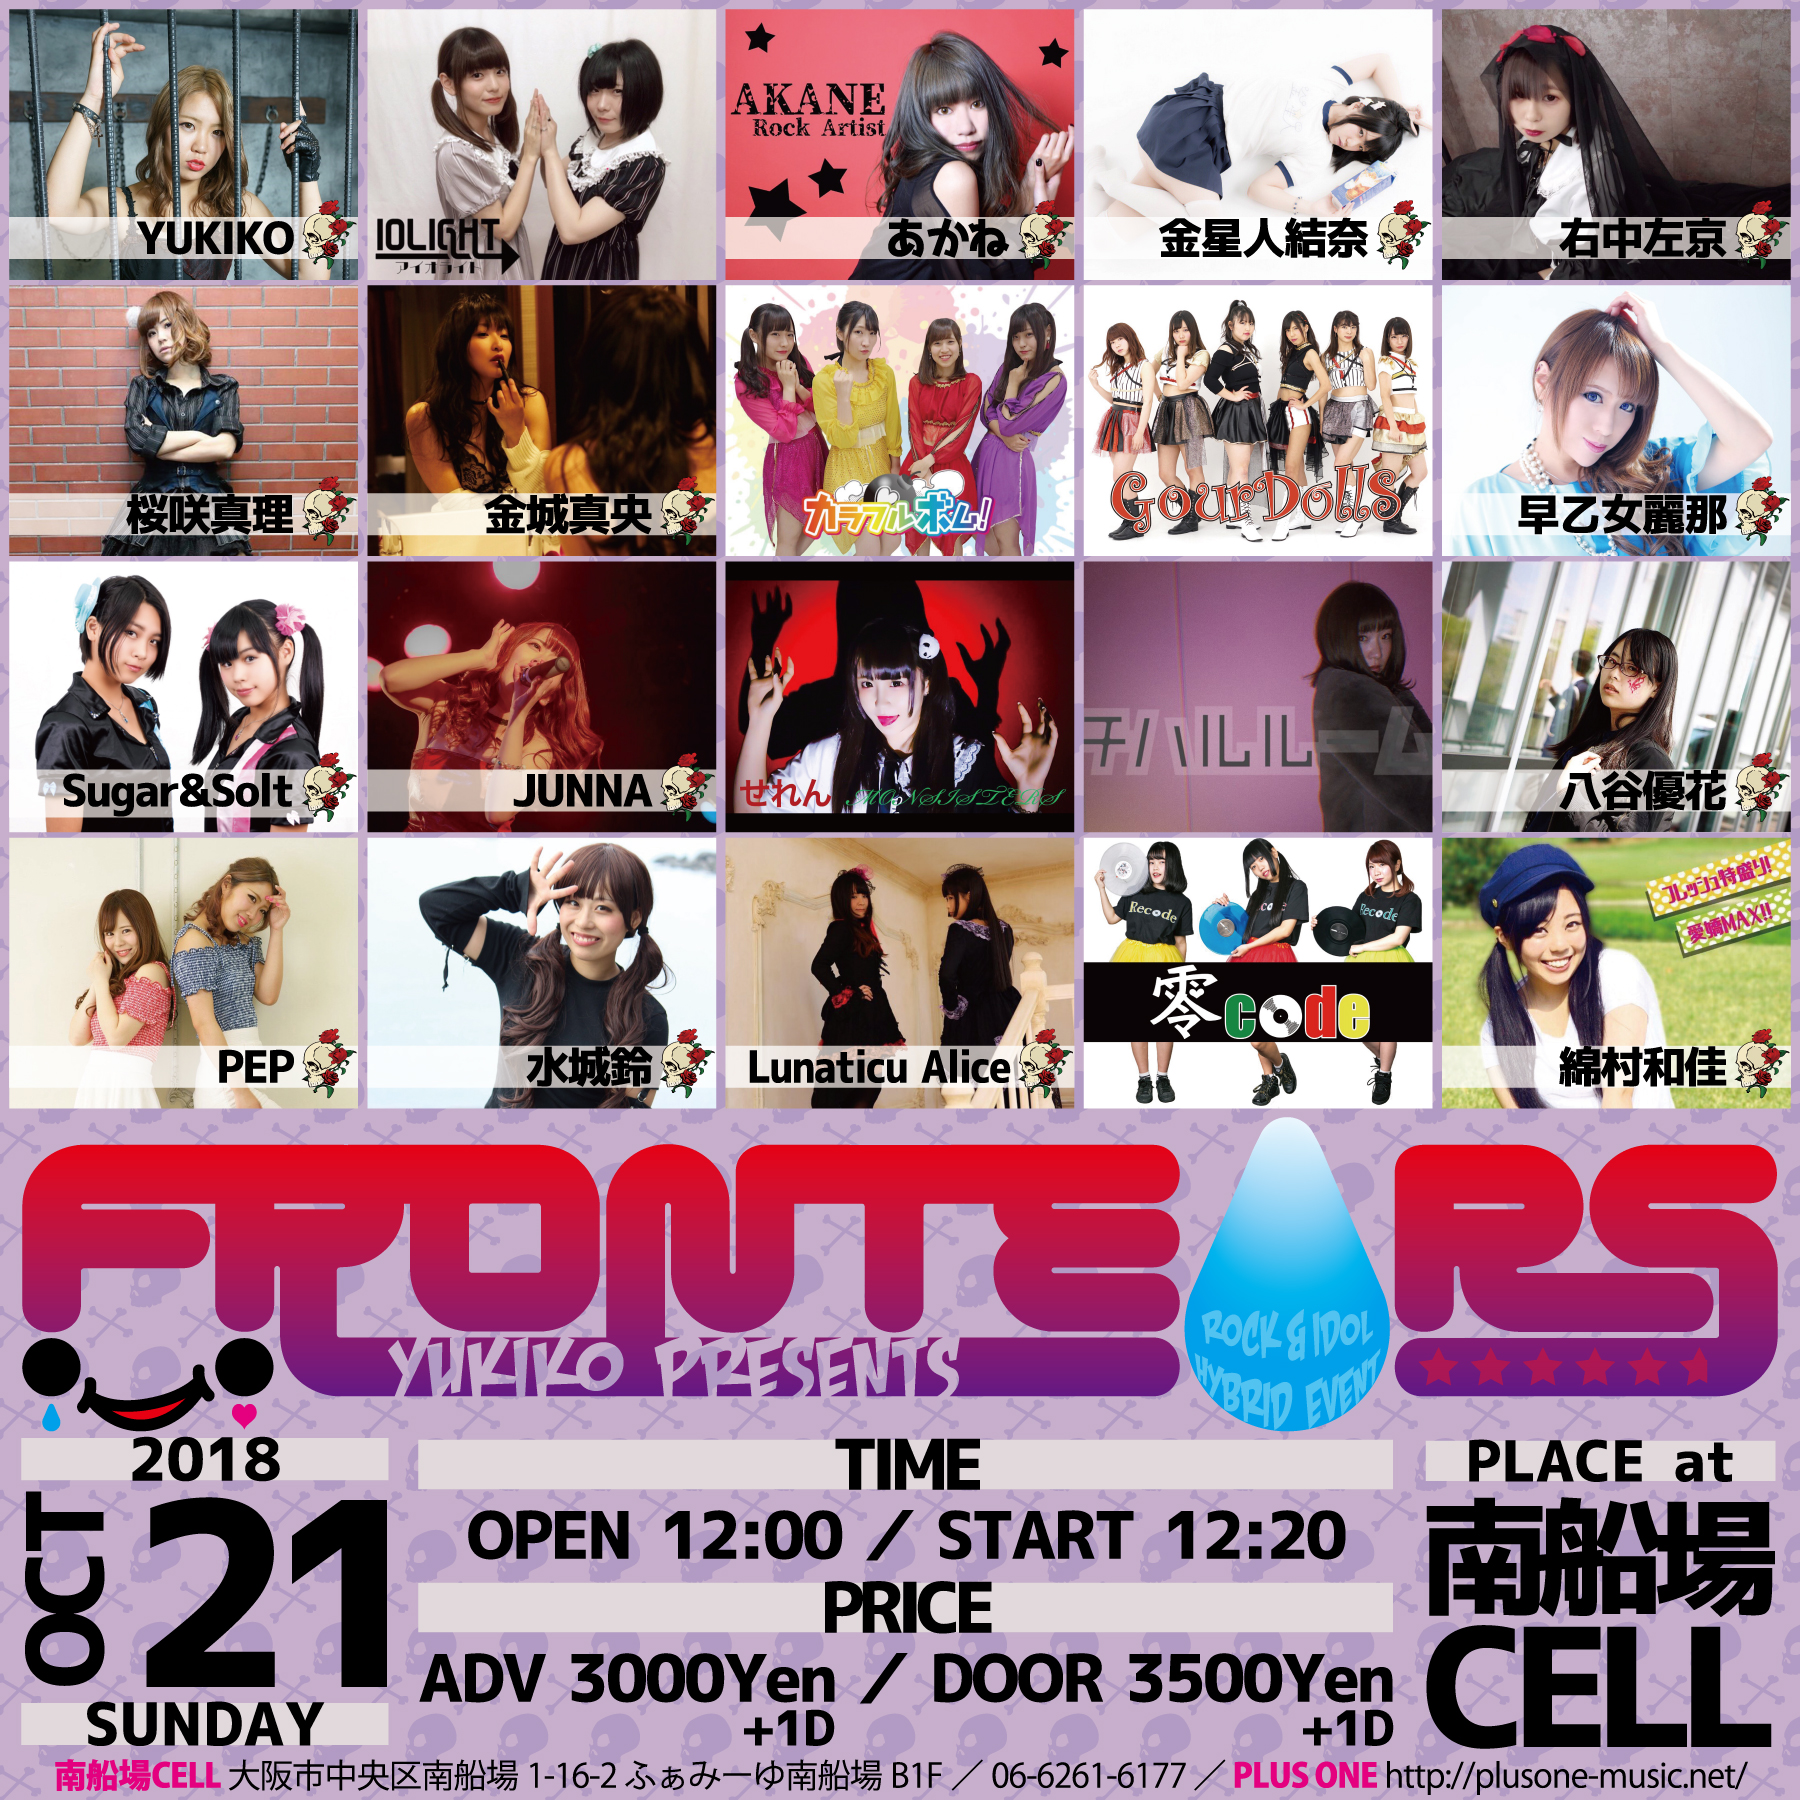 YUKIKO presents "FRONTEARS #11"